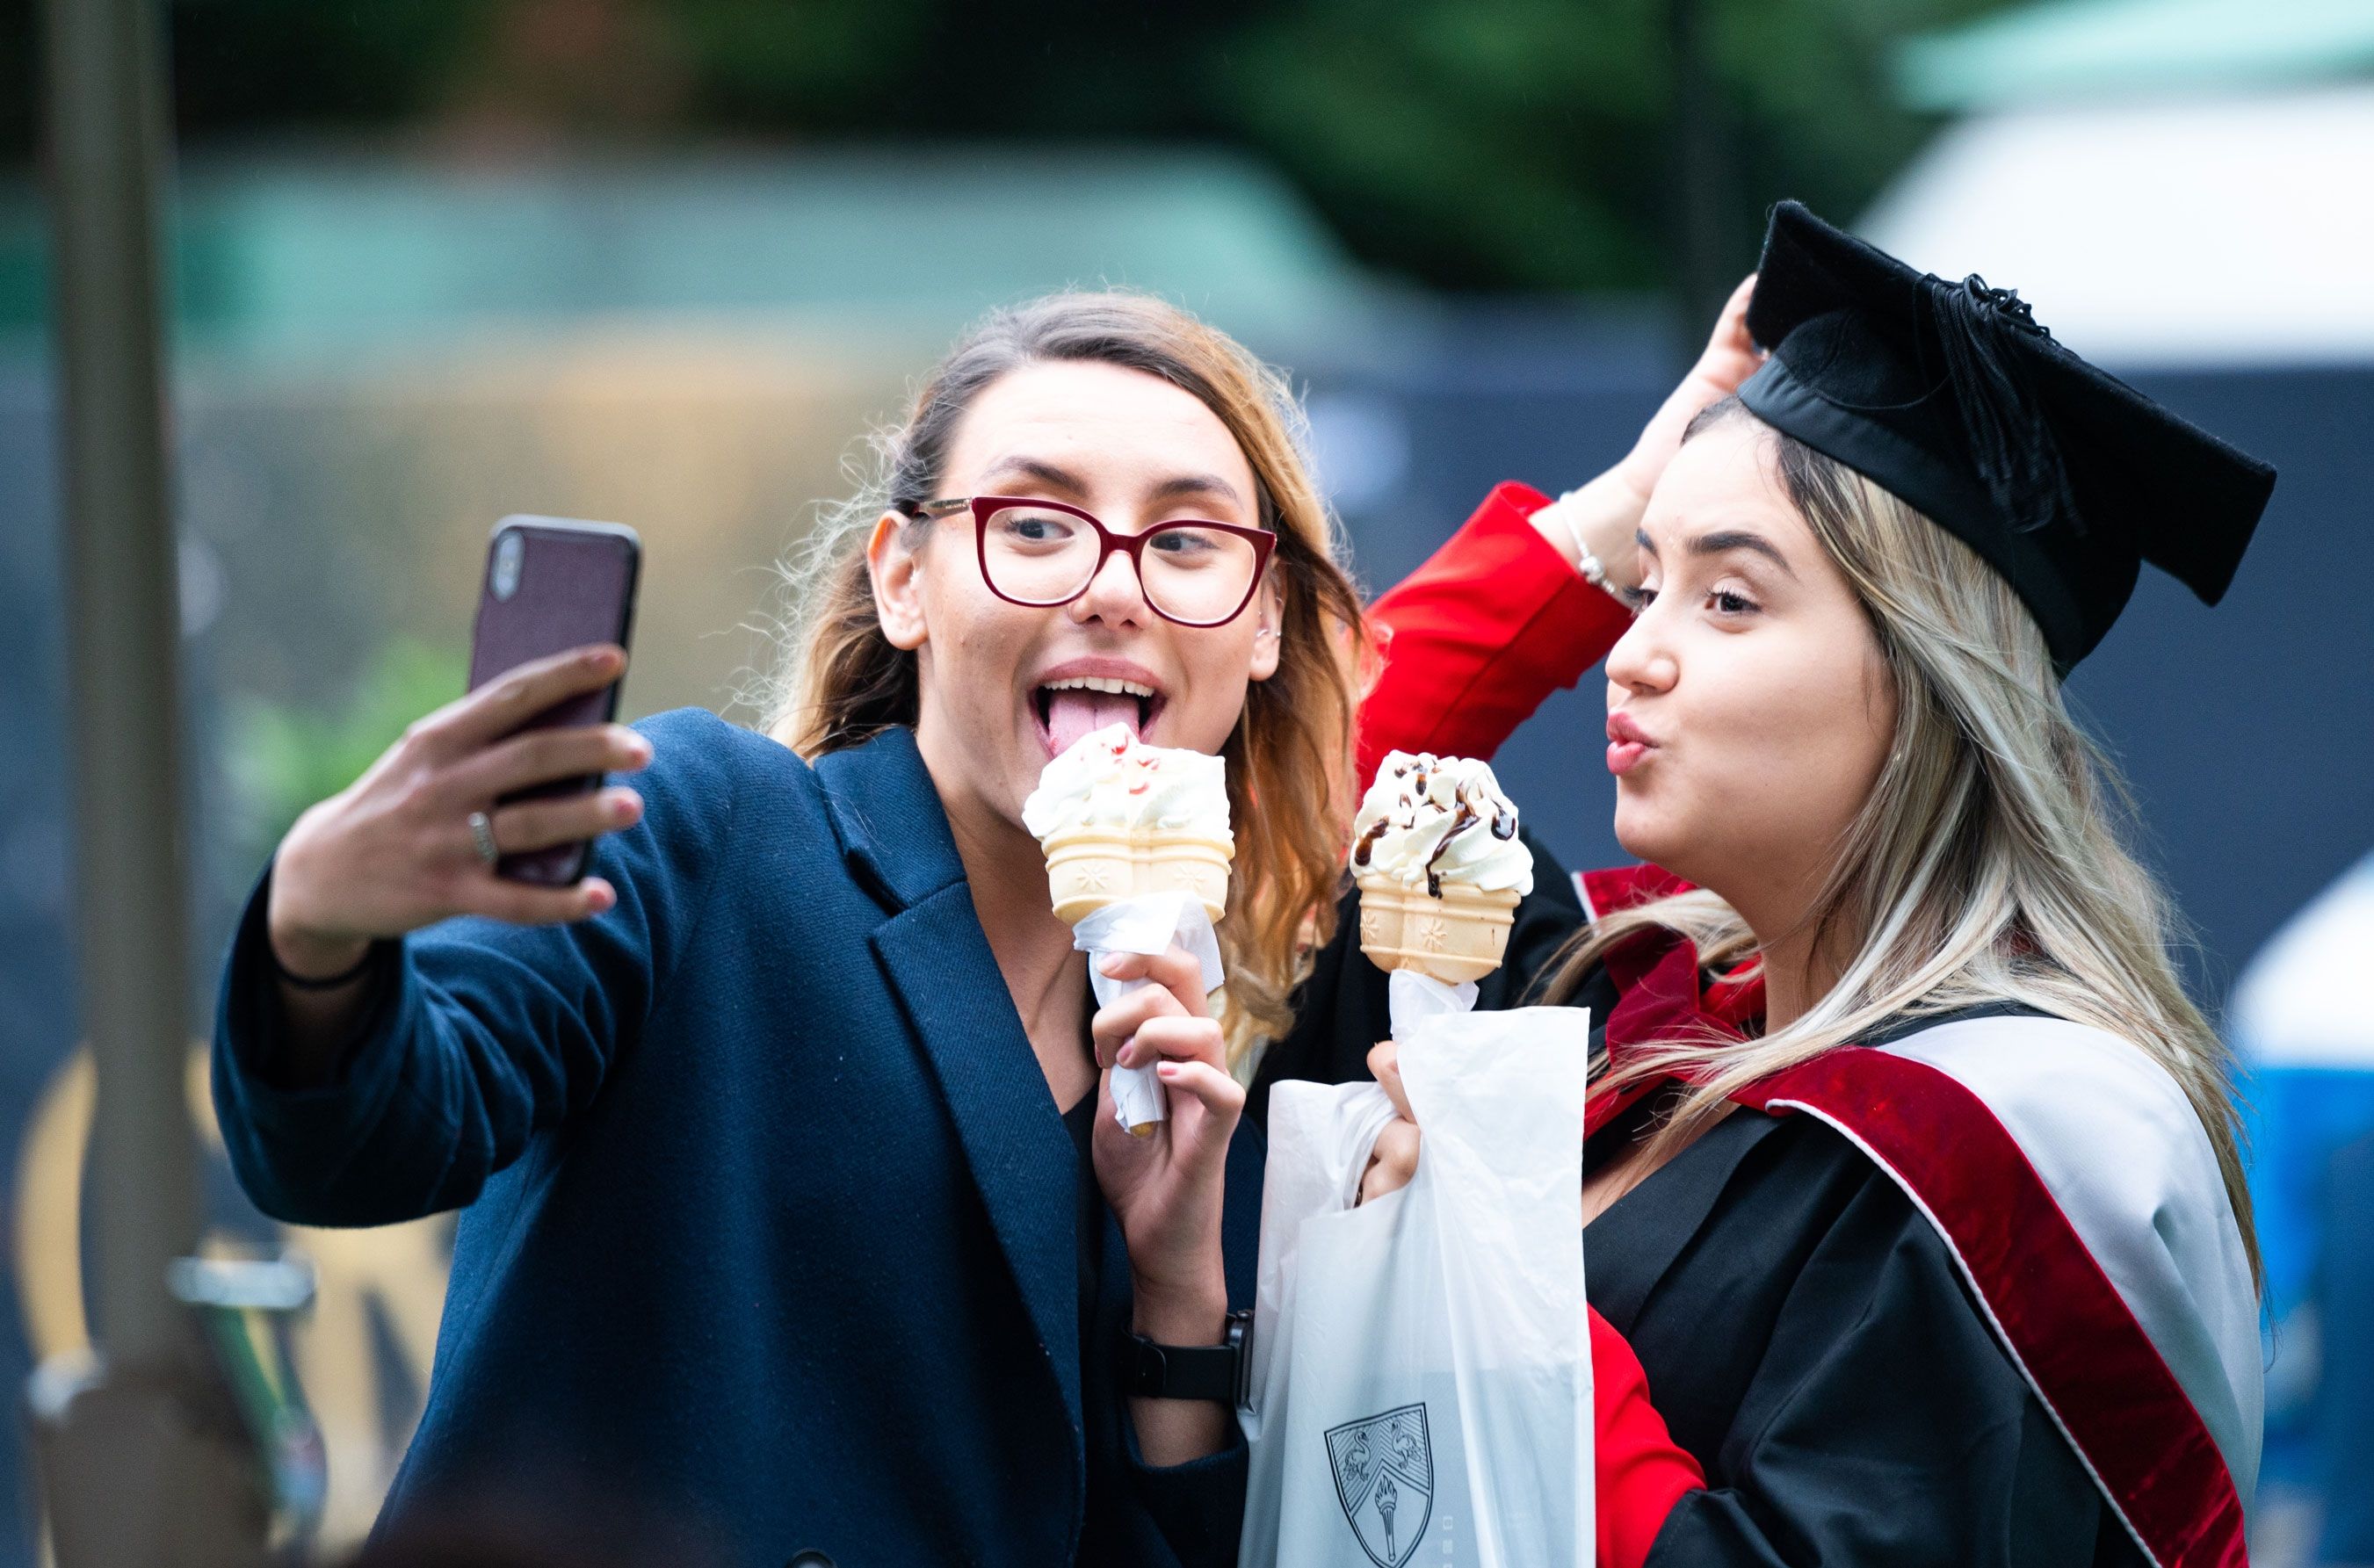 Female graduand taking a selfie with friend